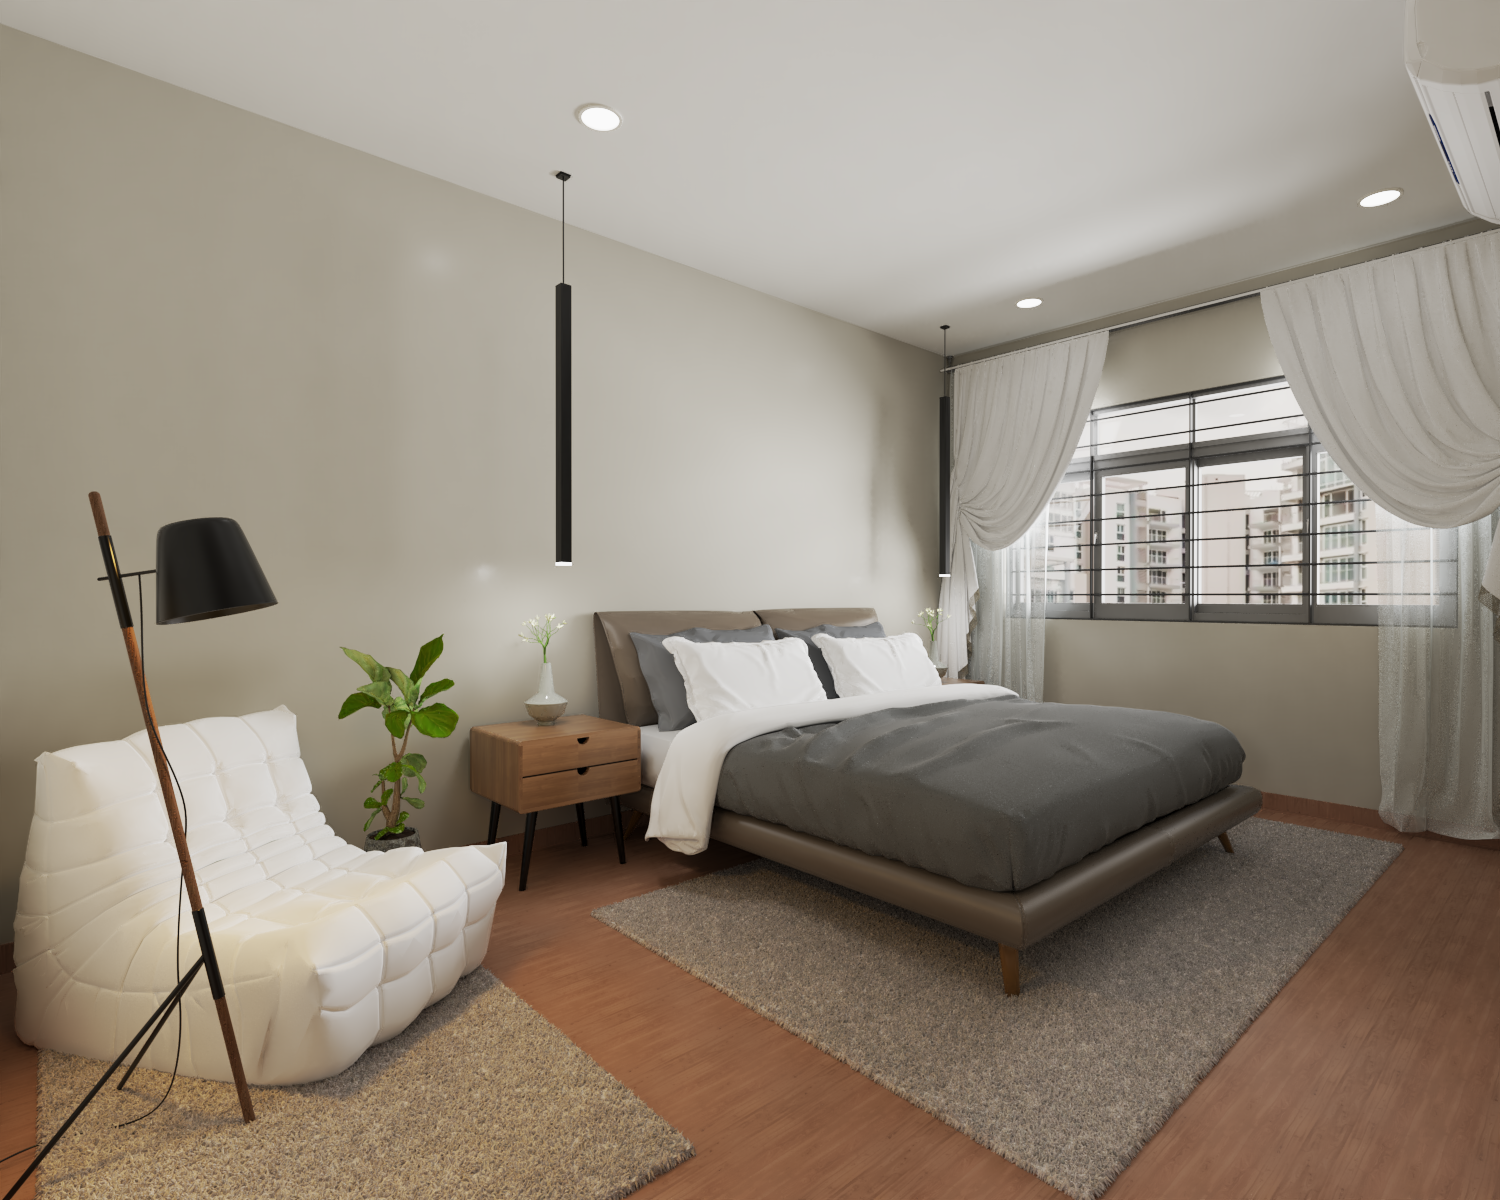 Minimal Spacious Bedroom Interior Design with Bean Bag